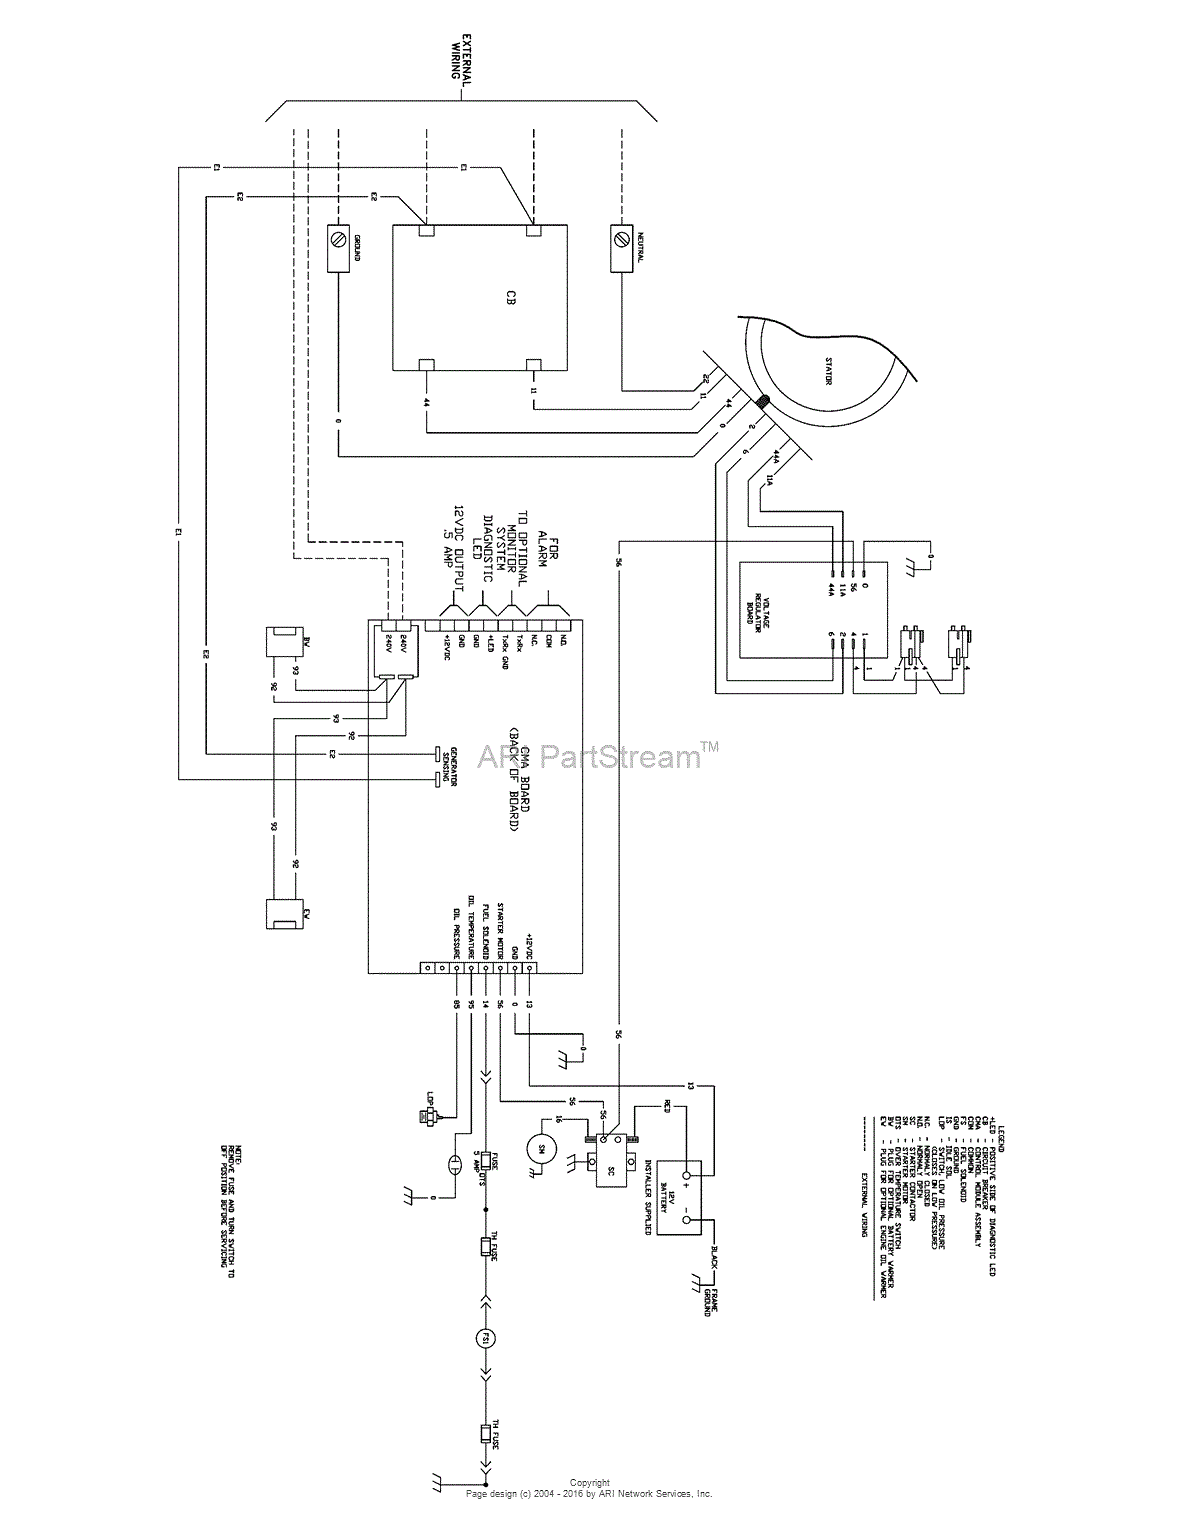 Wiring Diagram For Emergency Generator